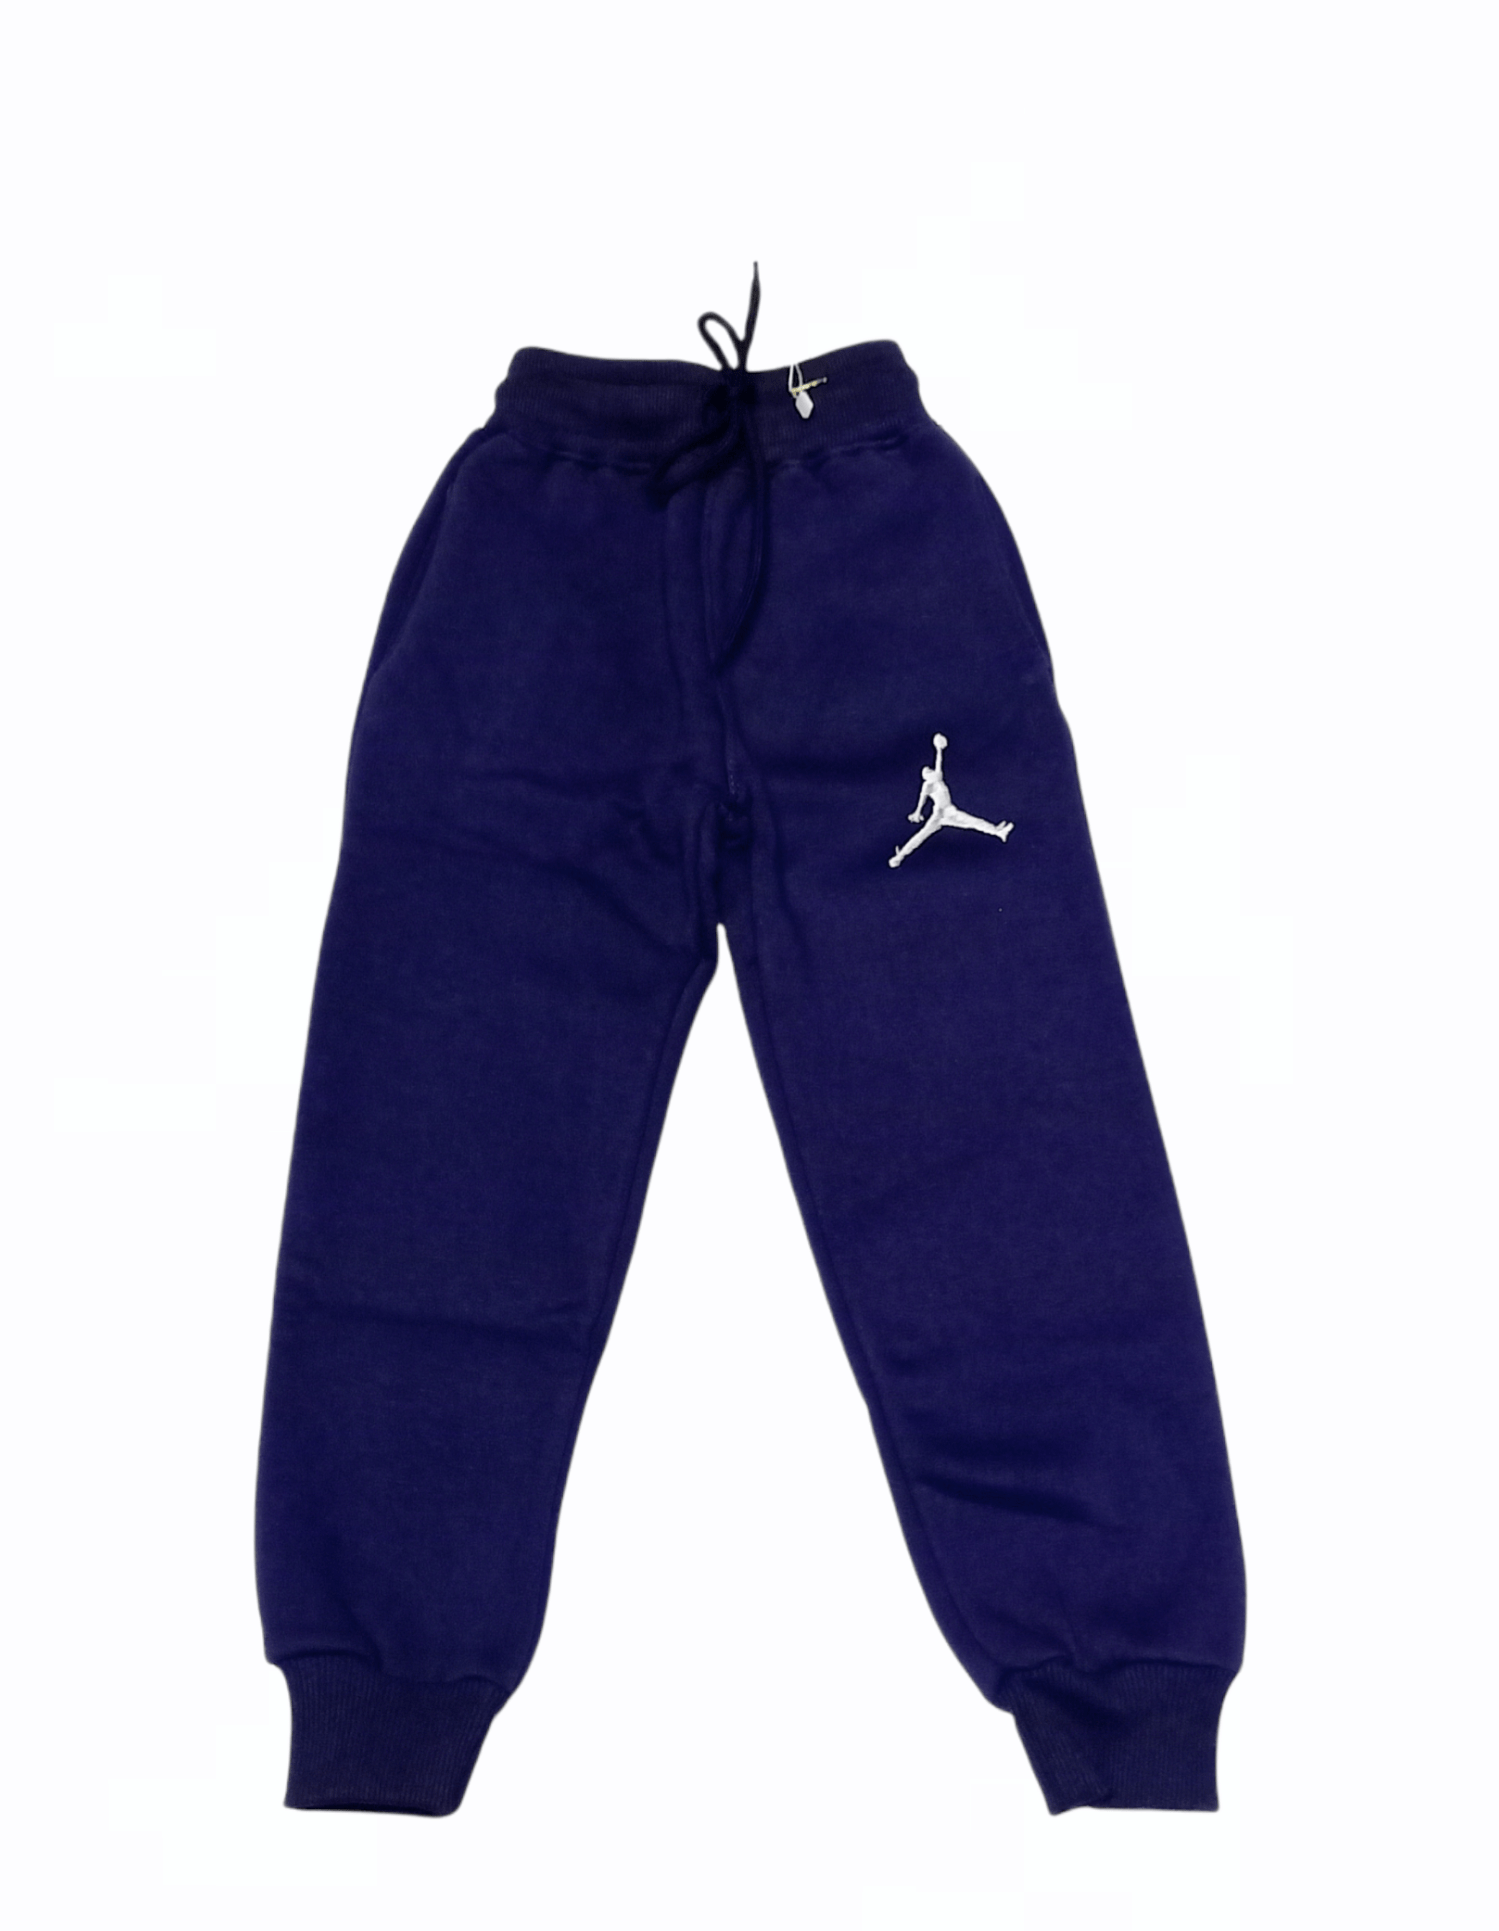 ElOutlet Pants Boy Jordan Pants - Blue Black